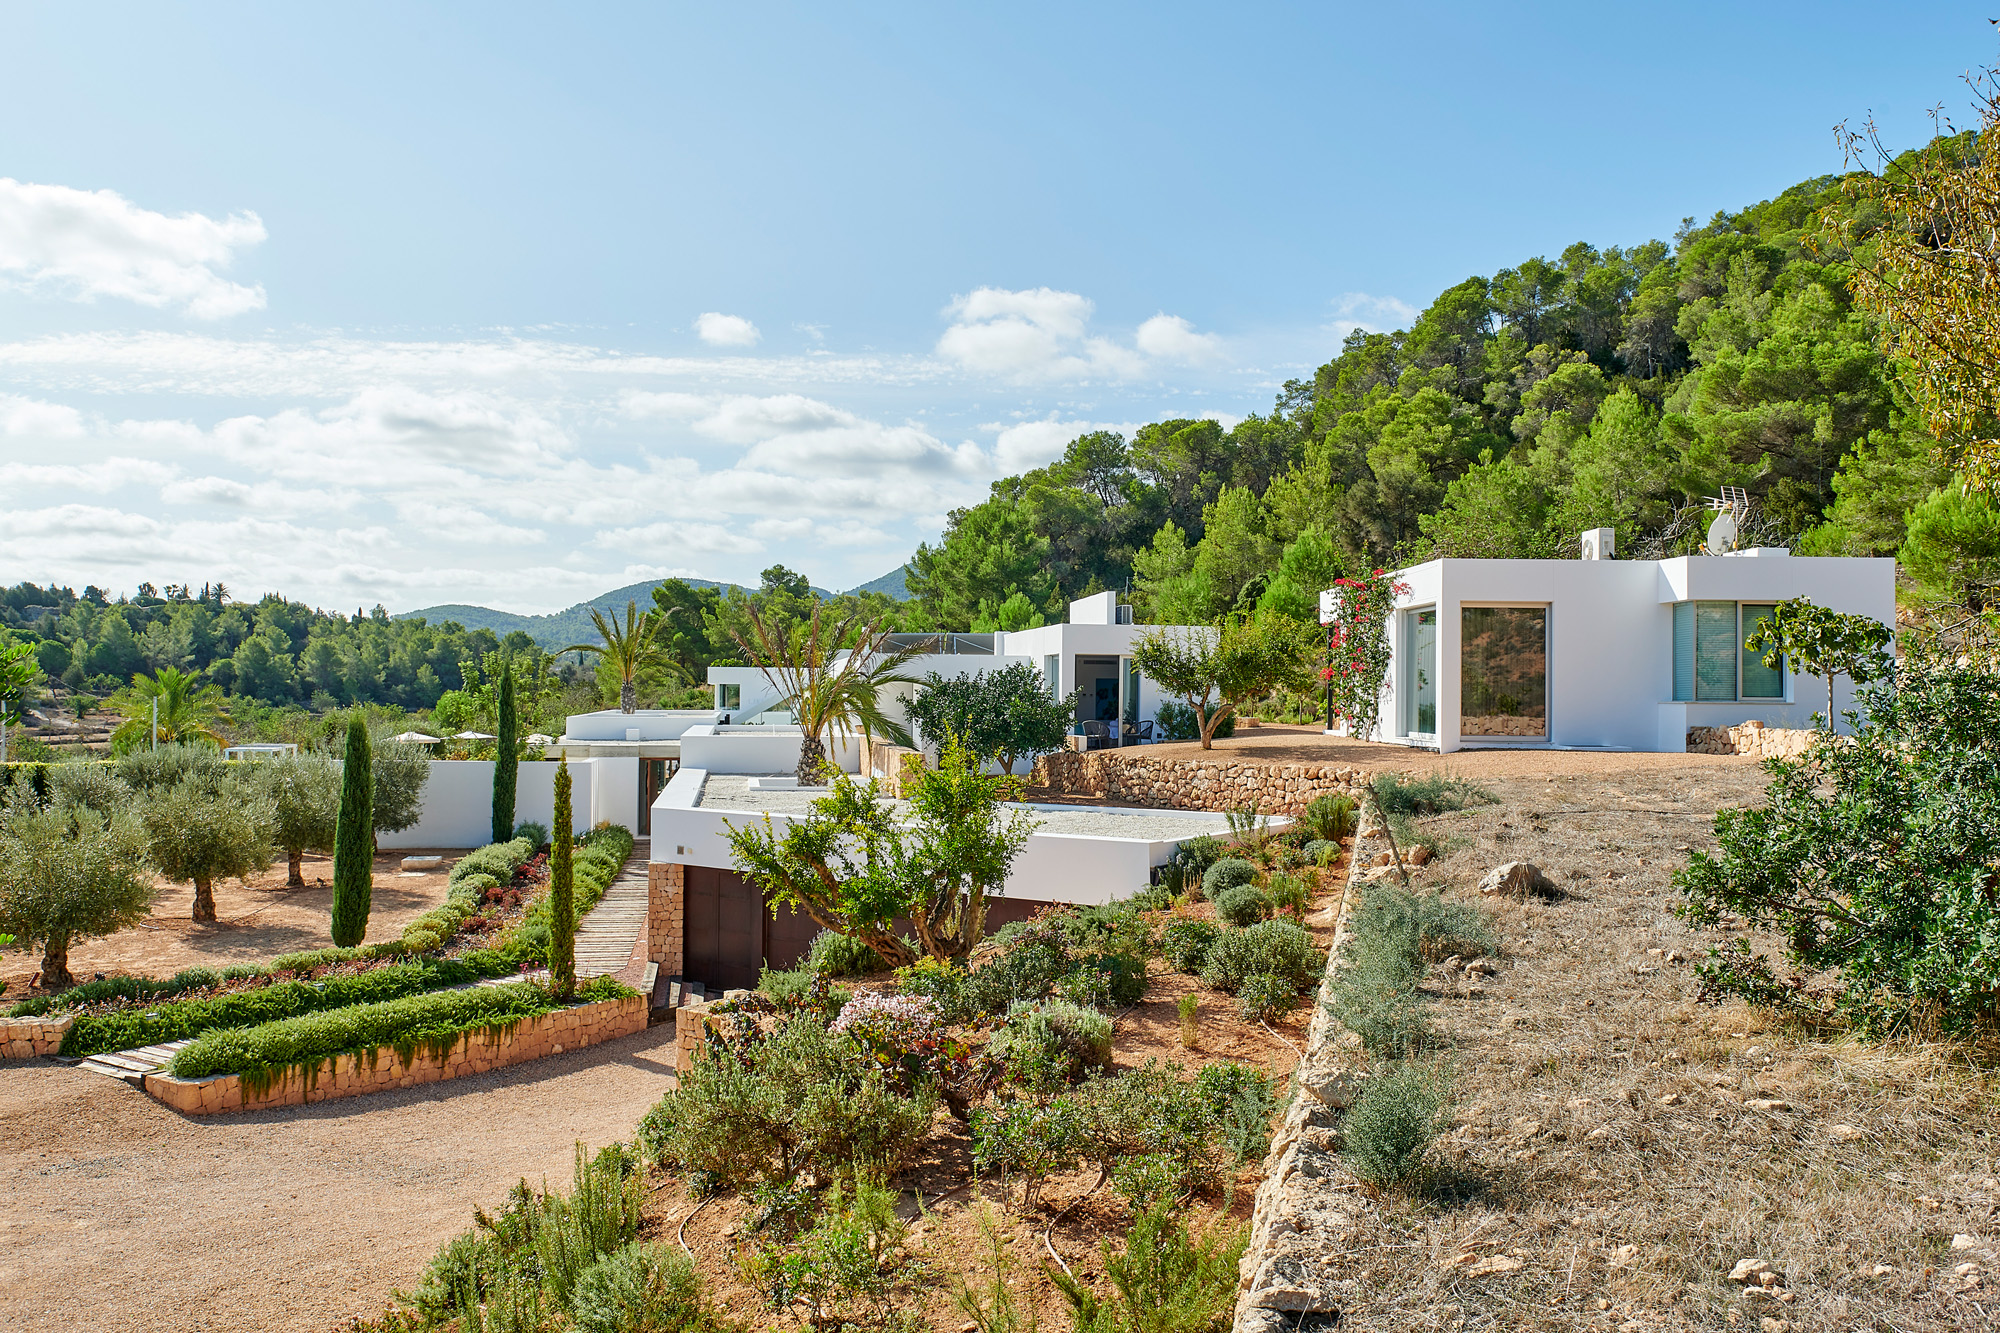 Garden by Pep Torres - contemporary architecture and design studio in Ibiza